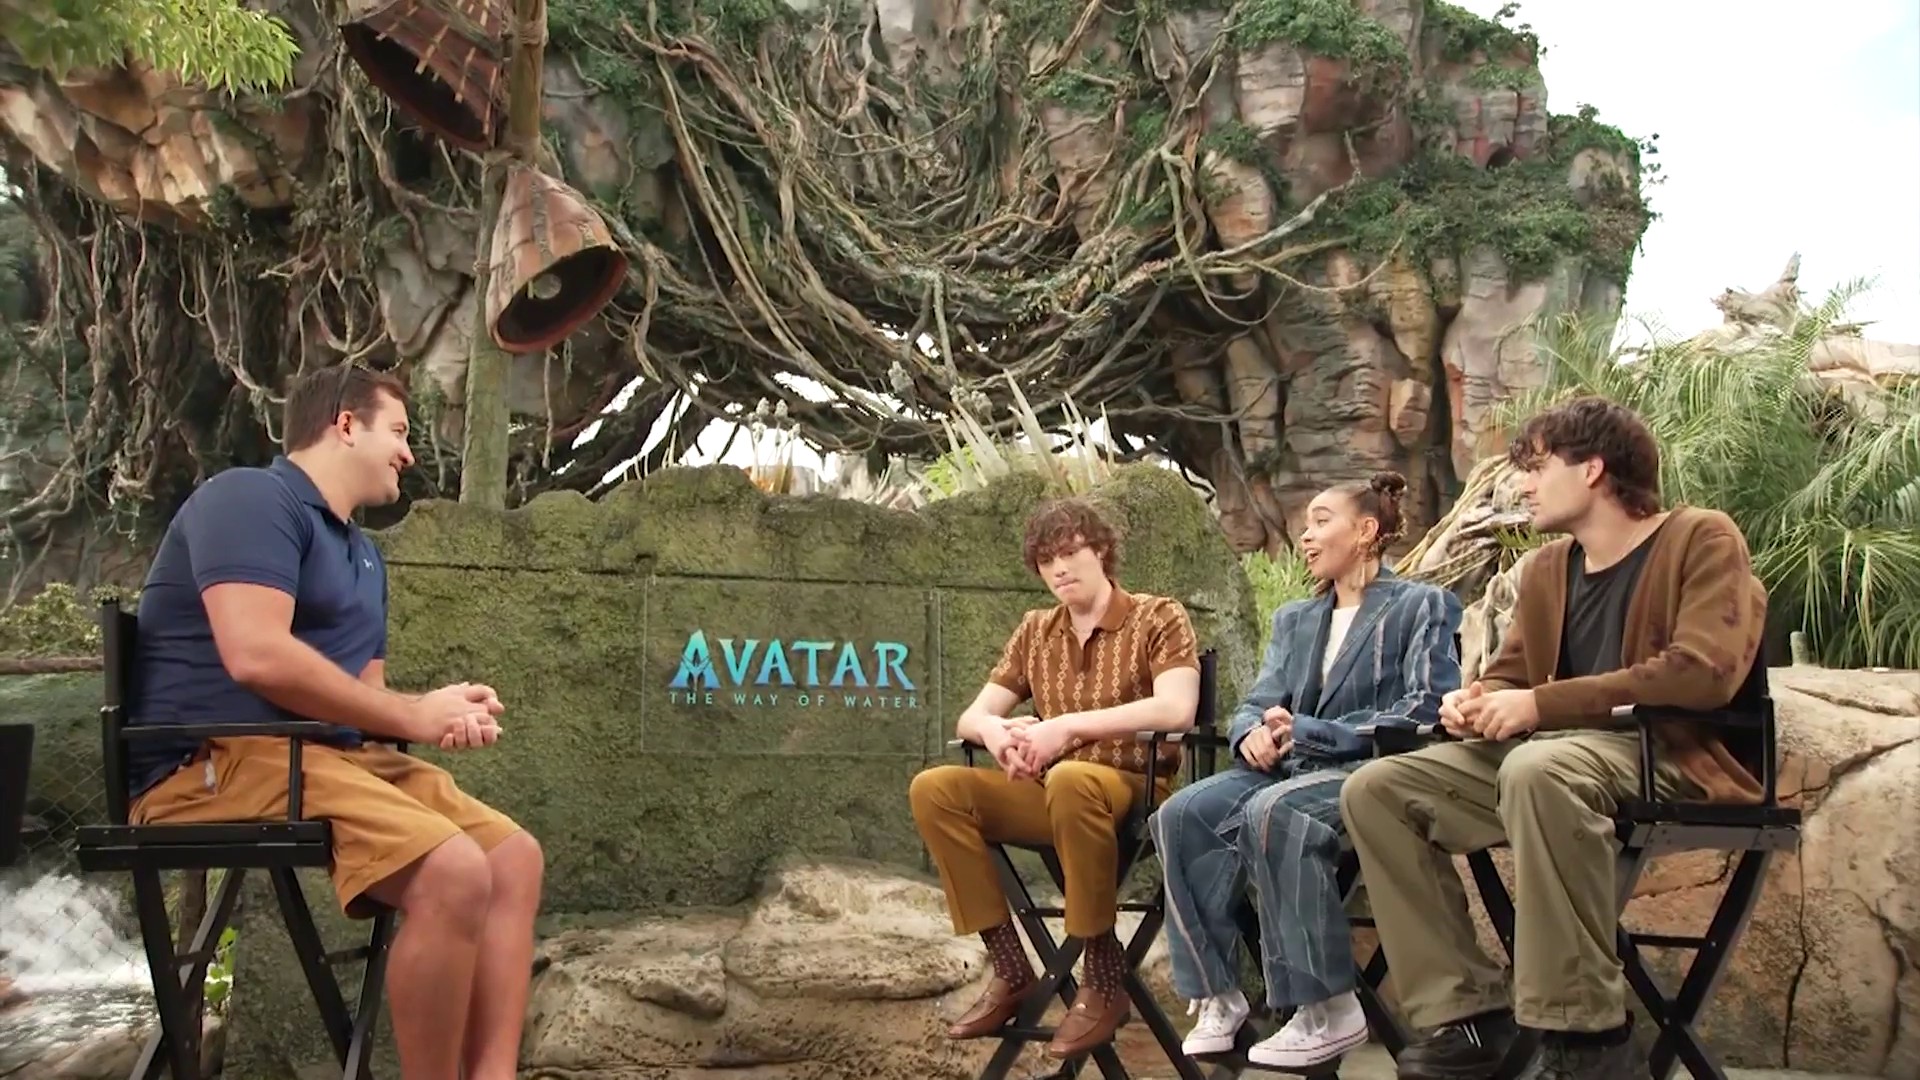 Avatar 2 cast Meet the Way of Water stars